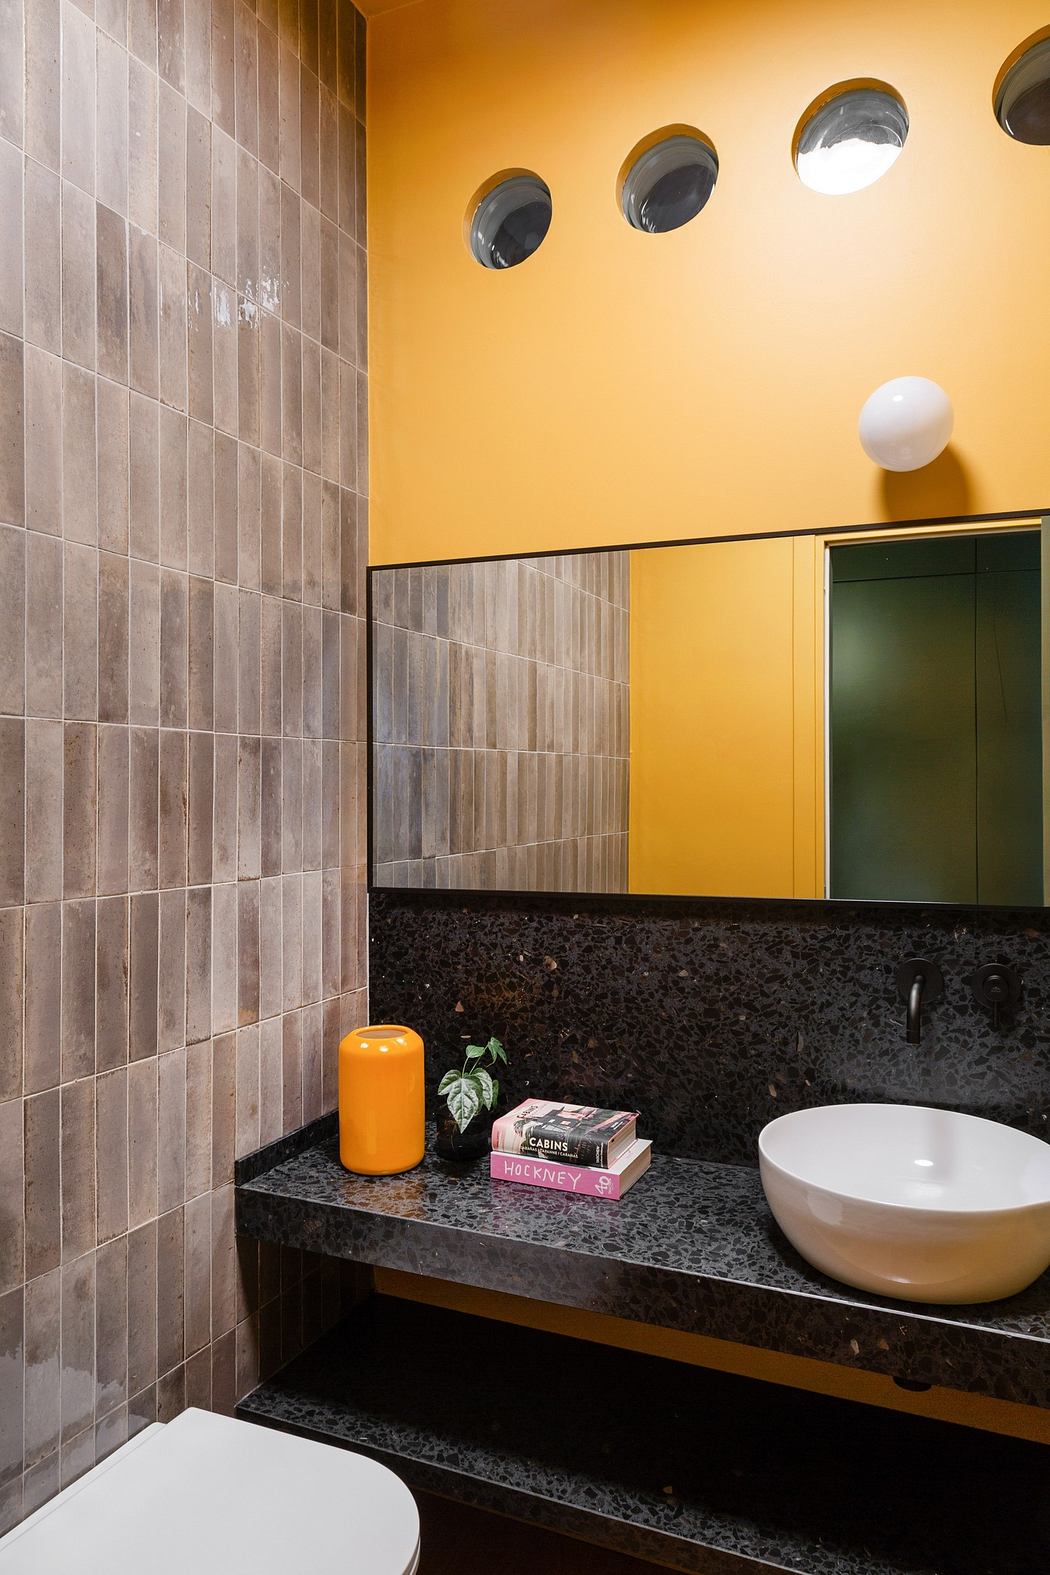 Contemporary bathroom with circular windows and yellow walls.